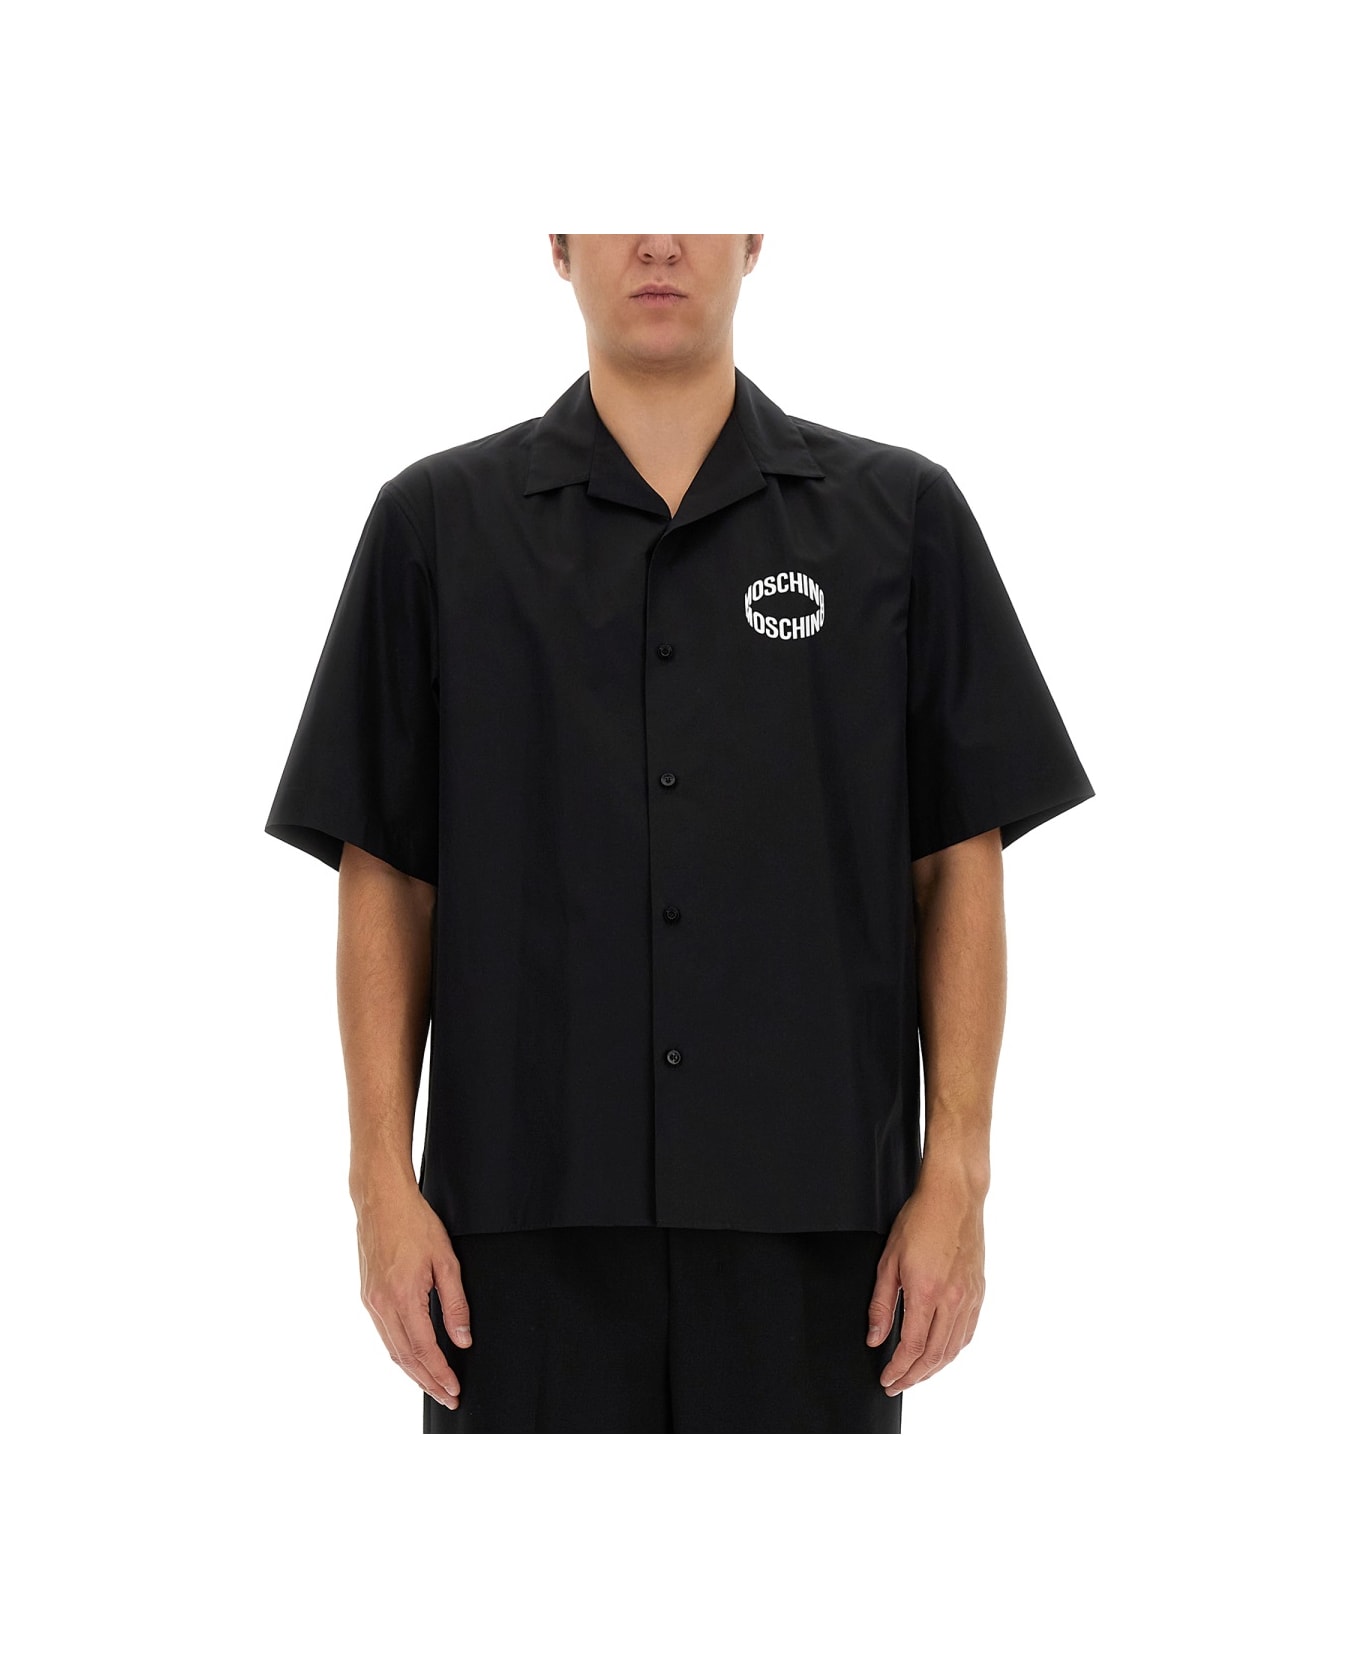 Moschino Shirt With Logo - BLACK